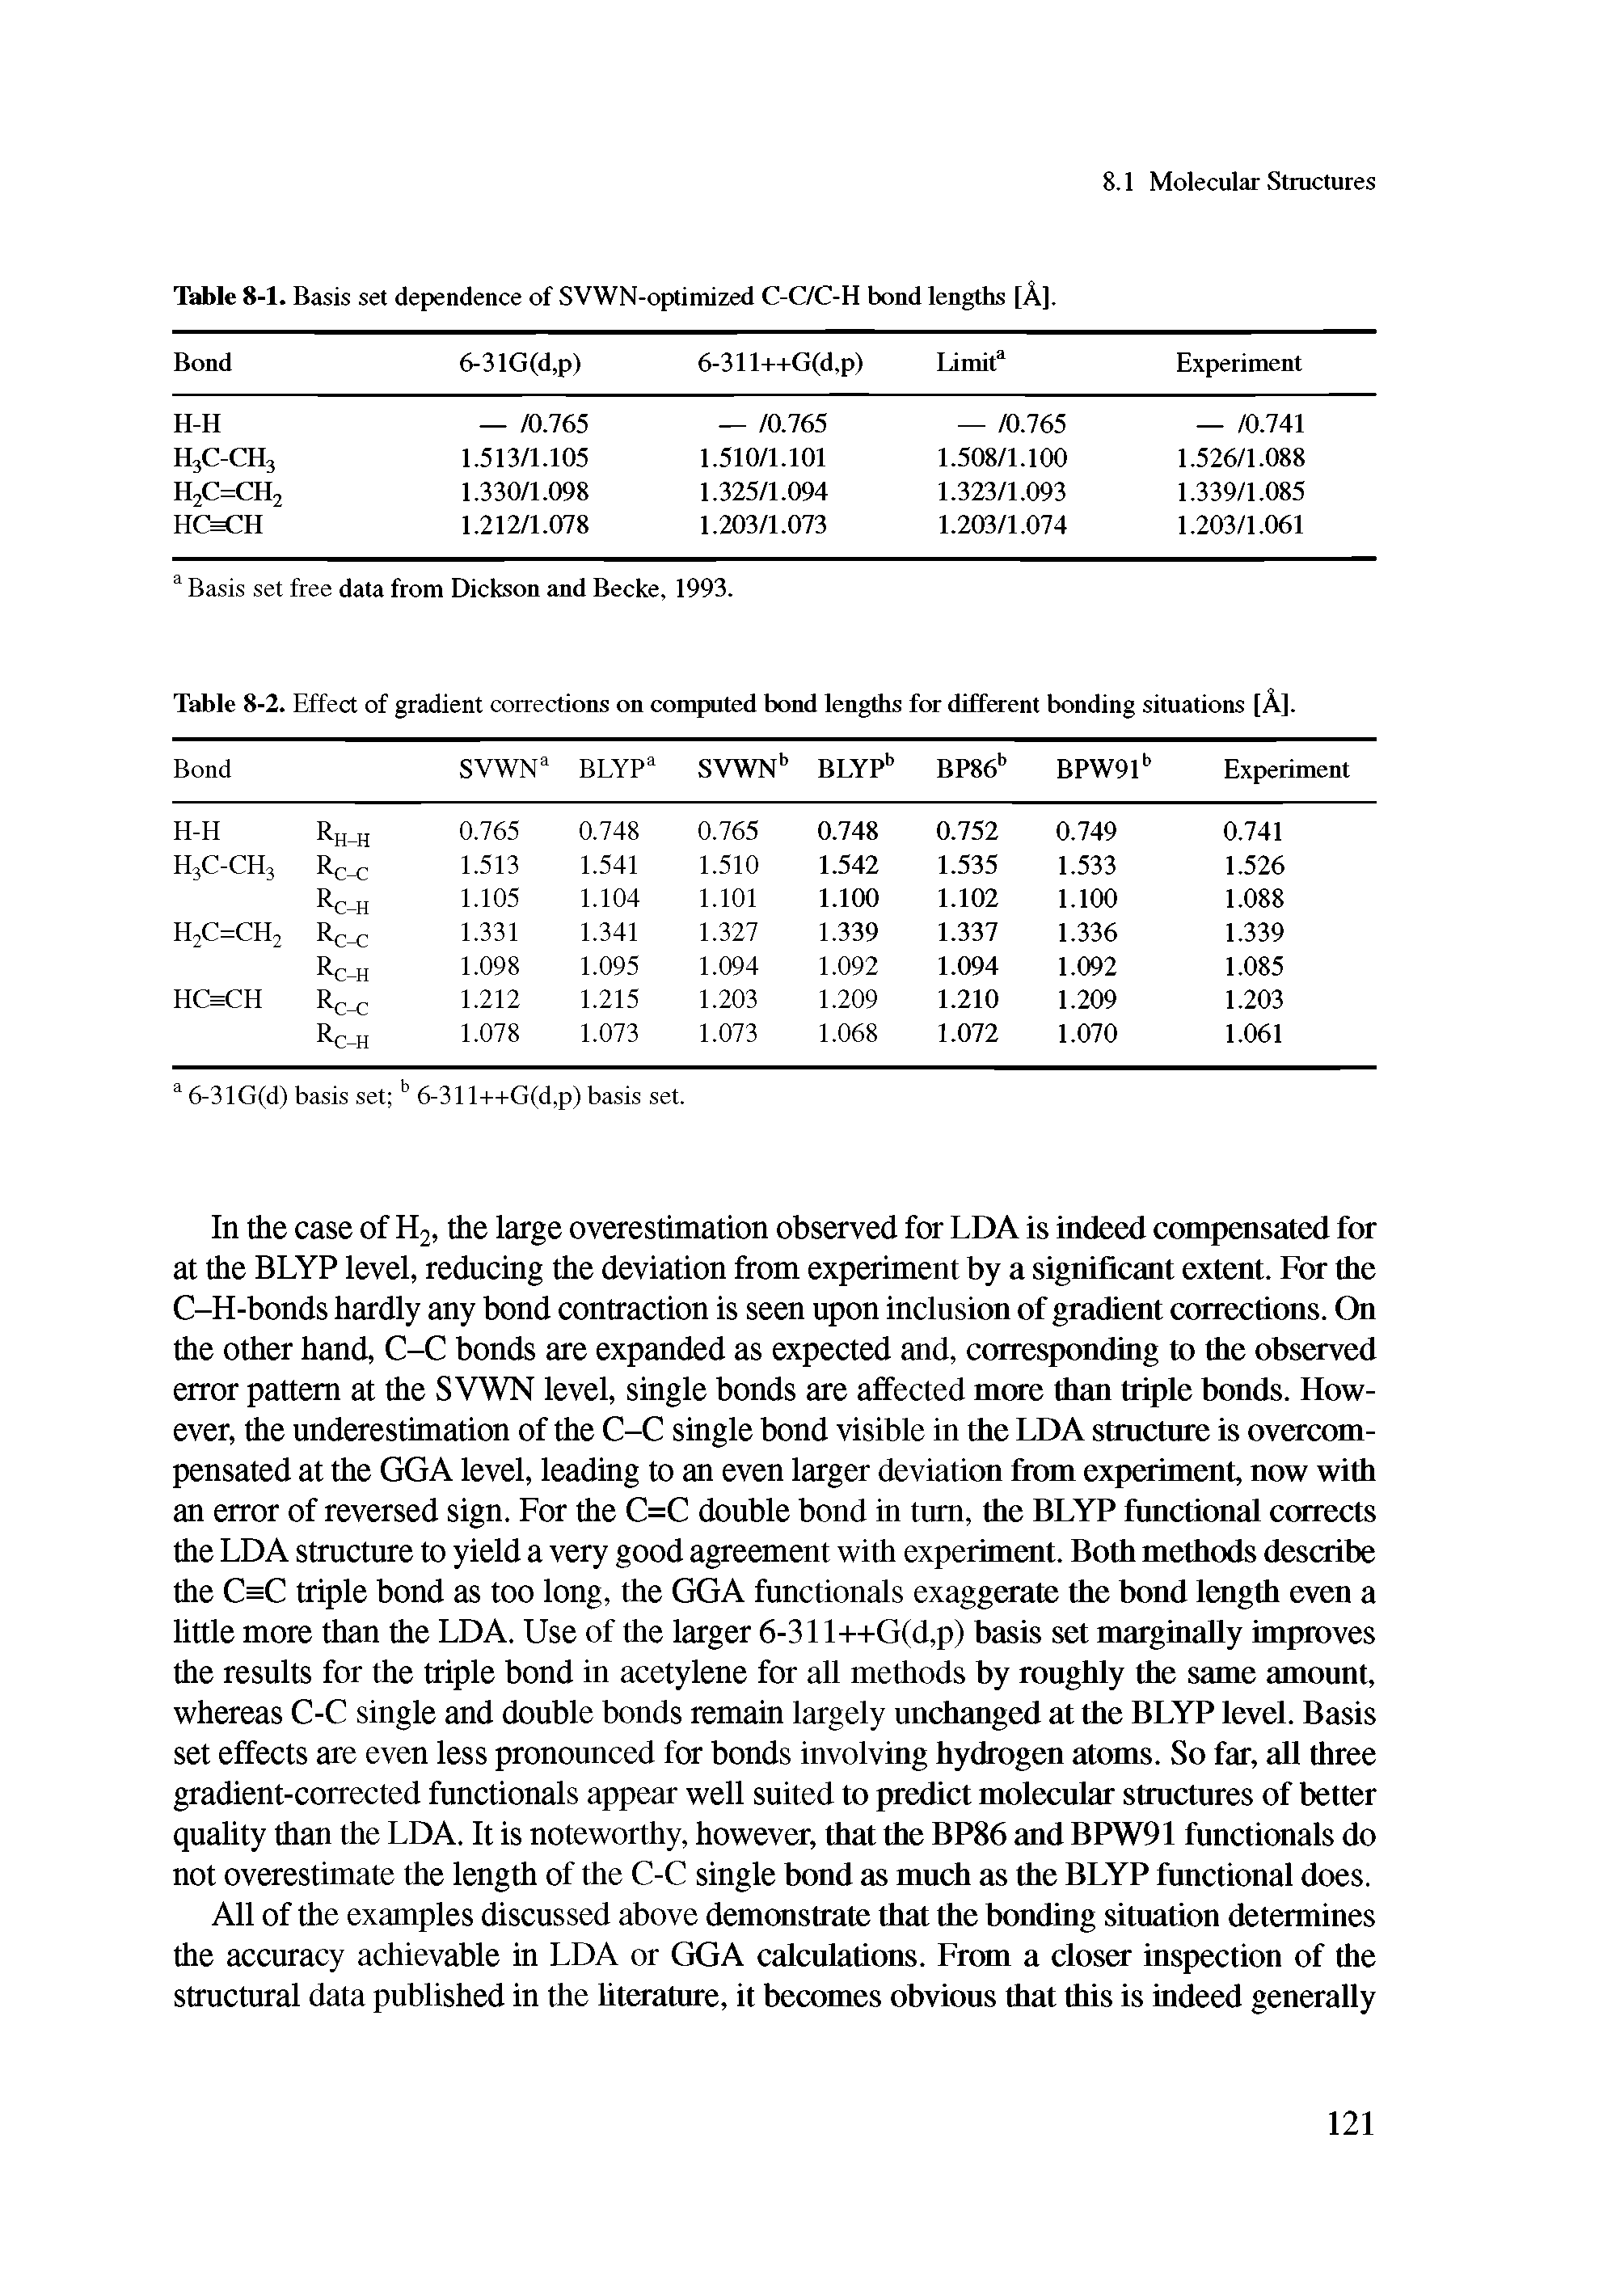 Table 8-1. Basis set dependence of SVWN-optimized C-C/C-H bond lengths [A].